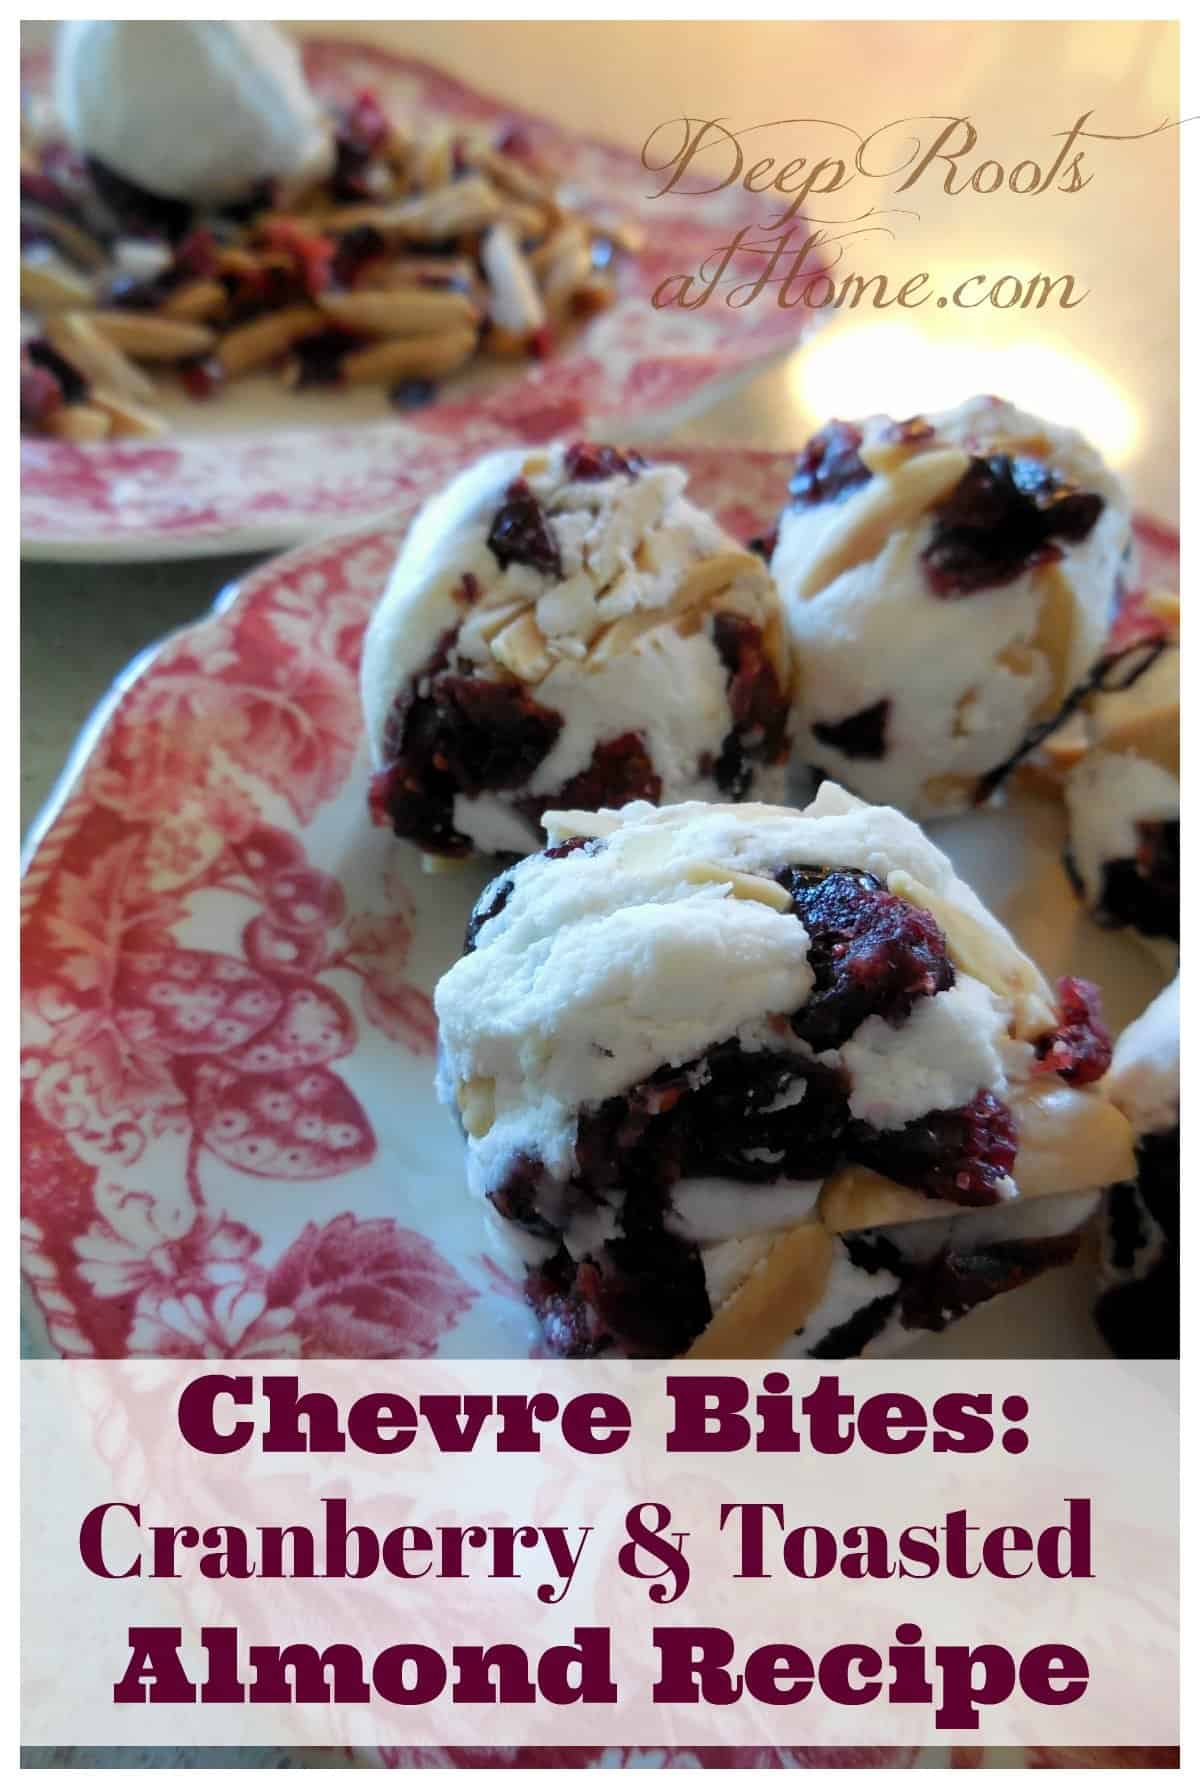 Chevre Bites: Cranberry & Toasted Almond Recipe. Recipe